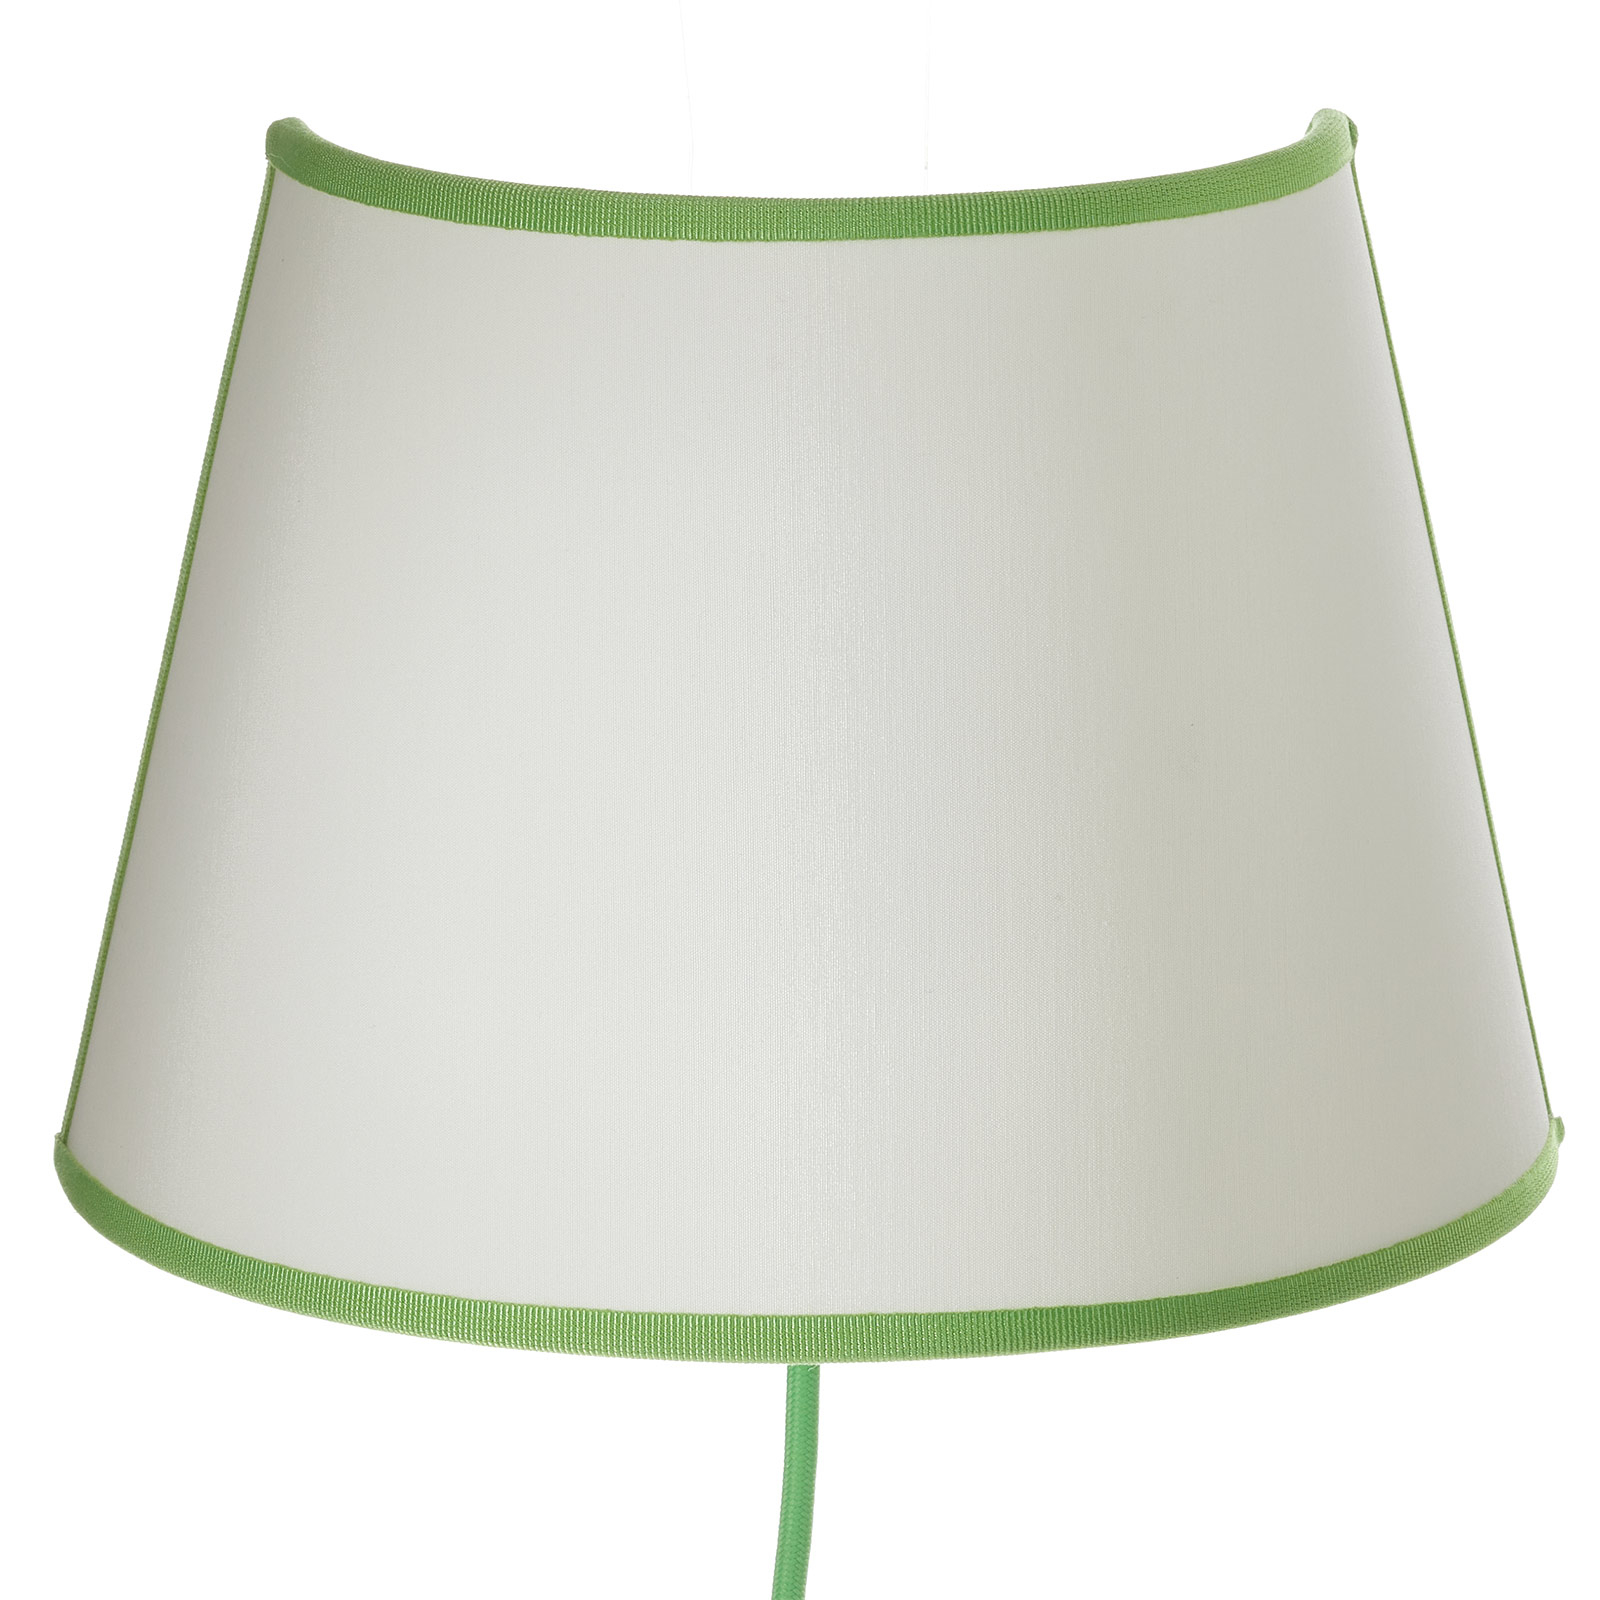 Keramiek-wandlamp A187 met stoffen kap, groen